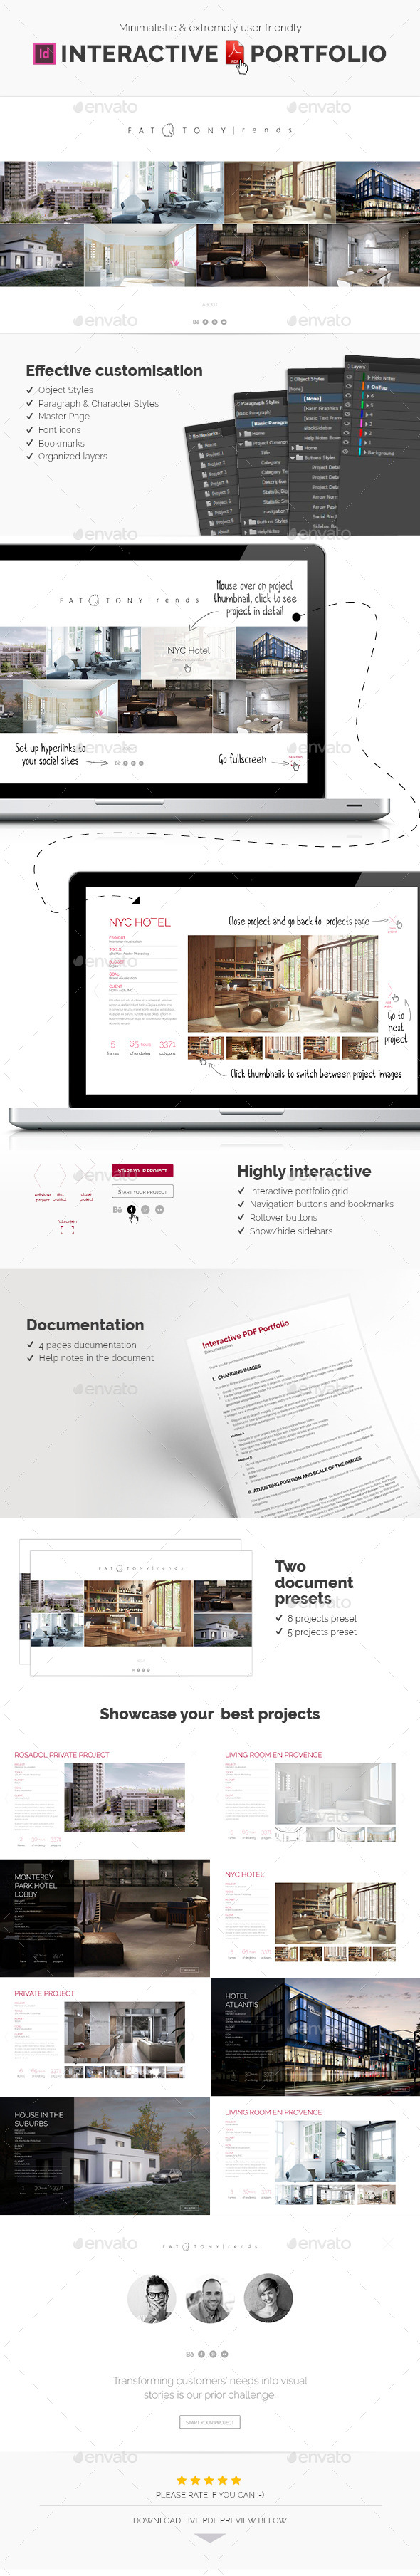 graphic design portfolio pdf template free download